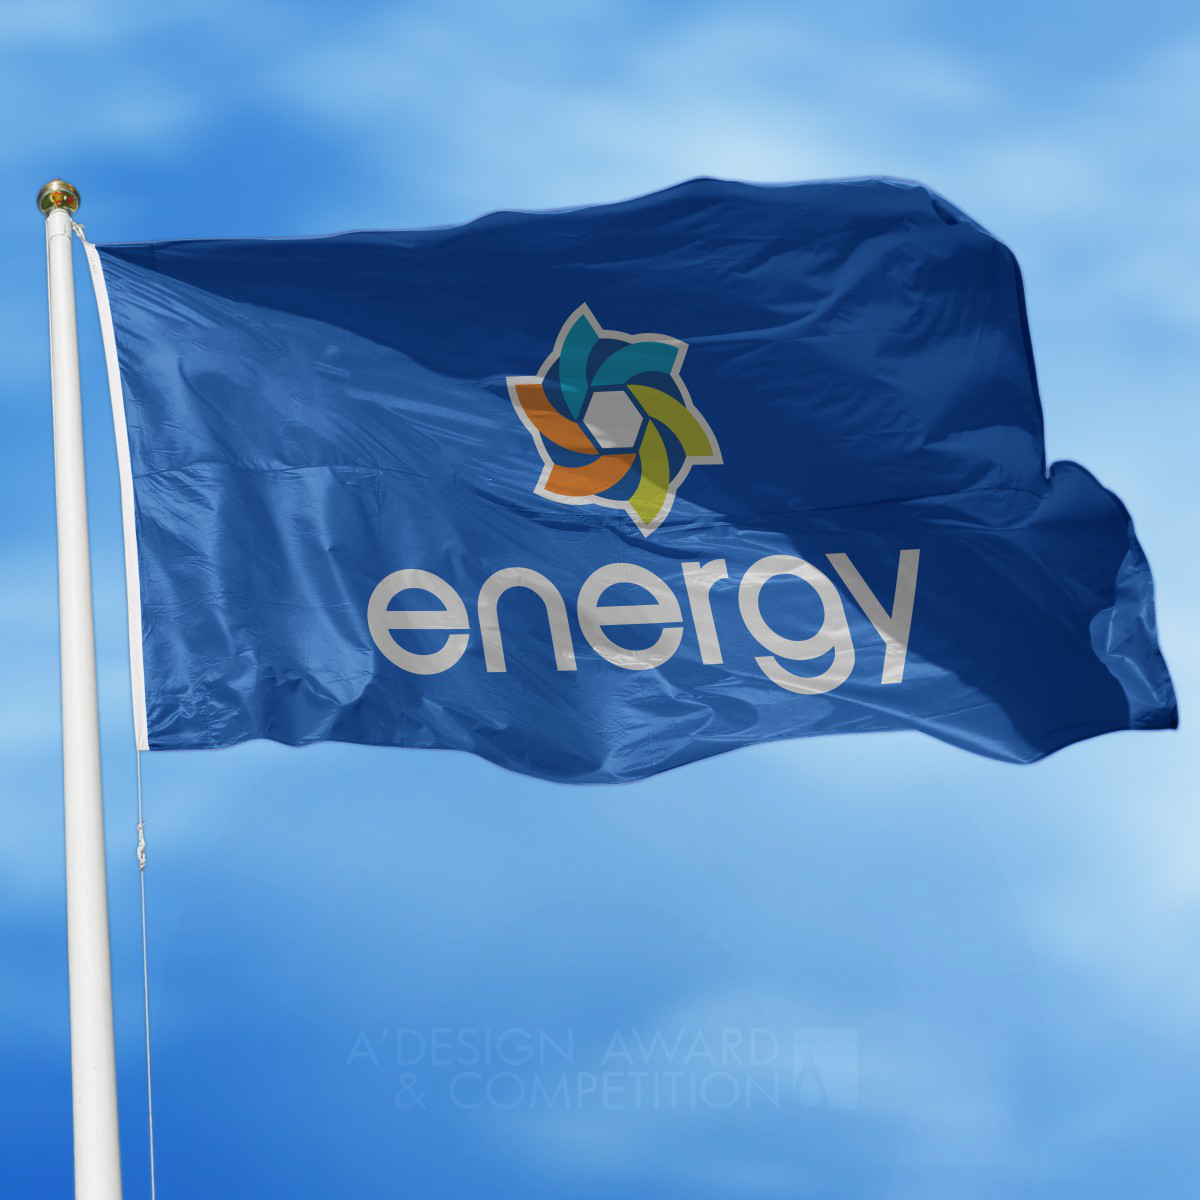 Energy Logo and Brand Identity